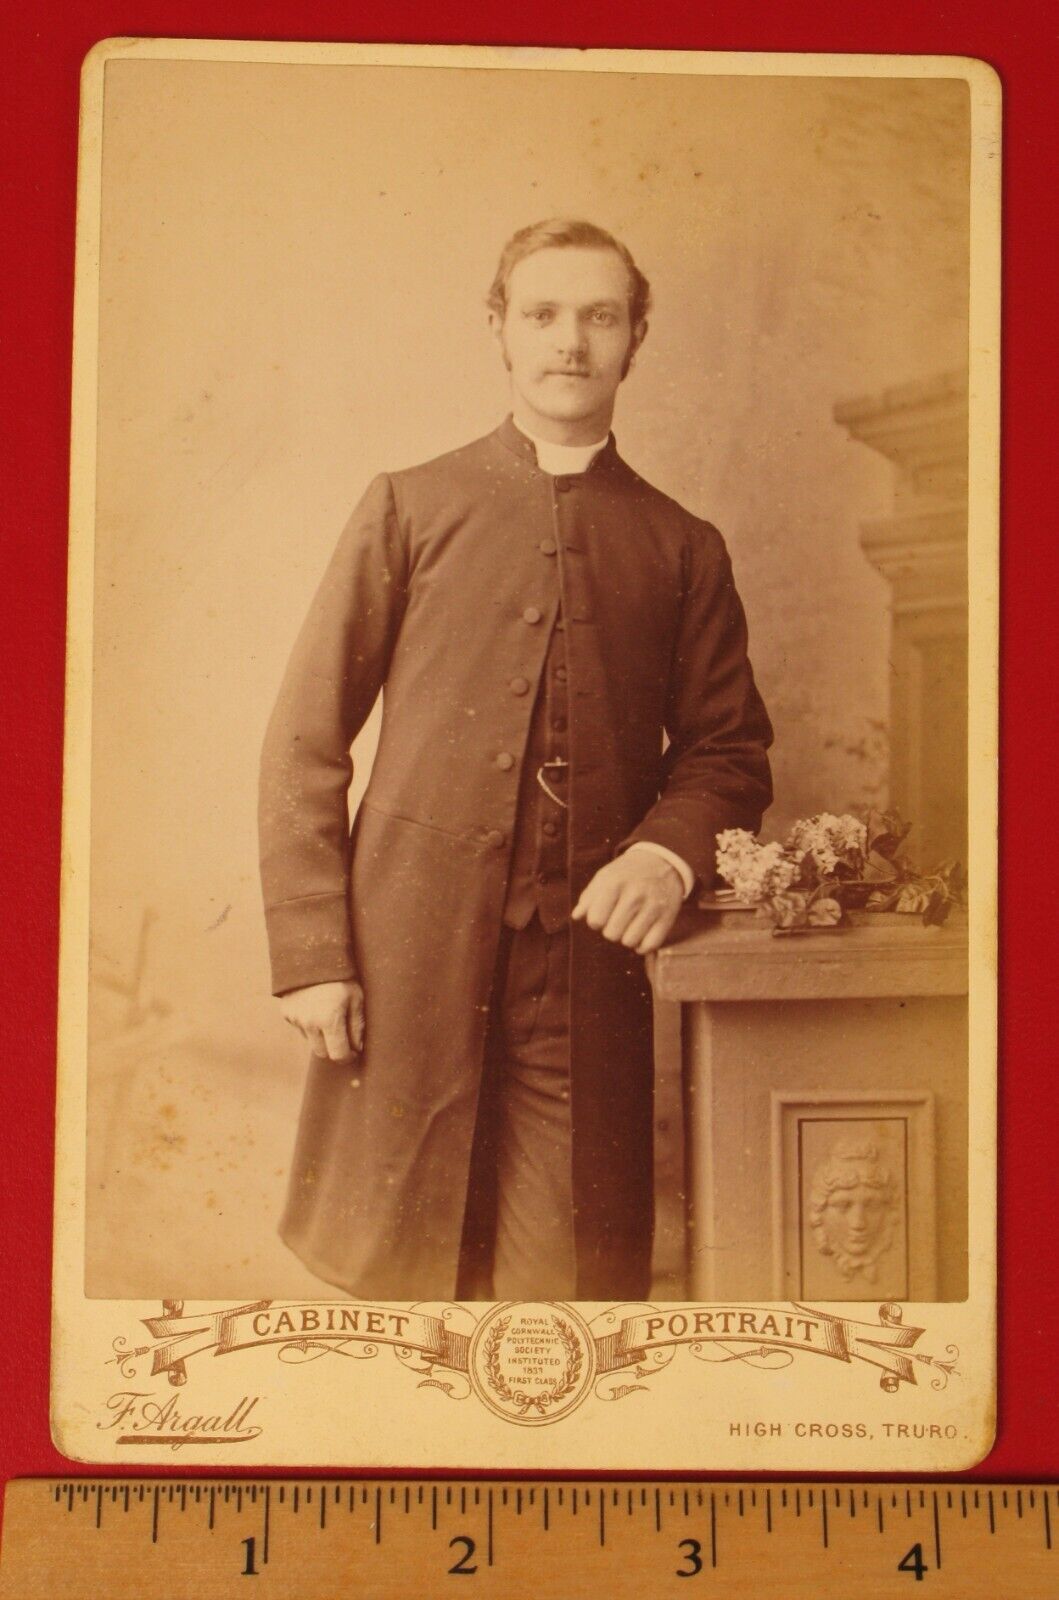 ORIGINAL ANTIQUE CABINET CARD PHOTOGRAPH OF PRIEST PASTOR CHARLES RICKARD RARE 